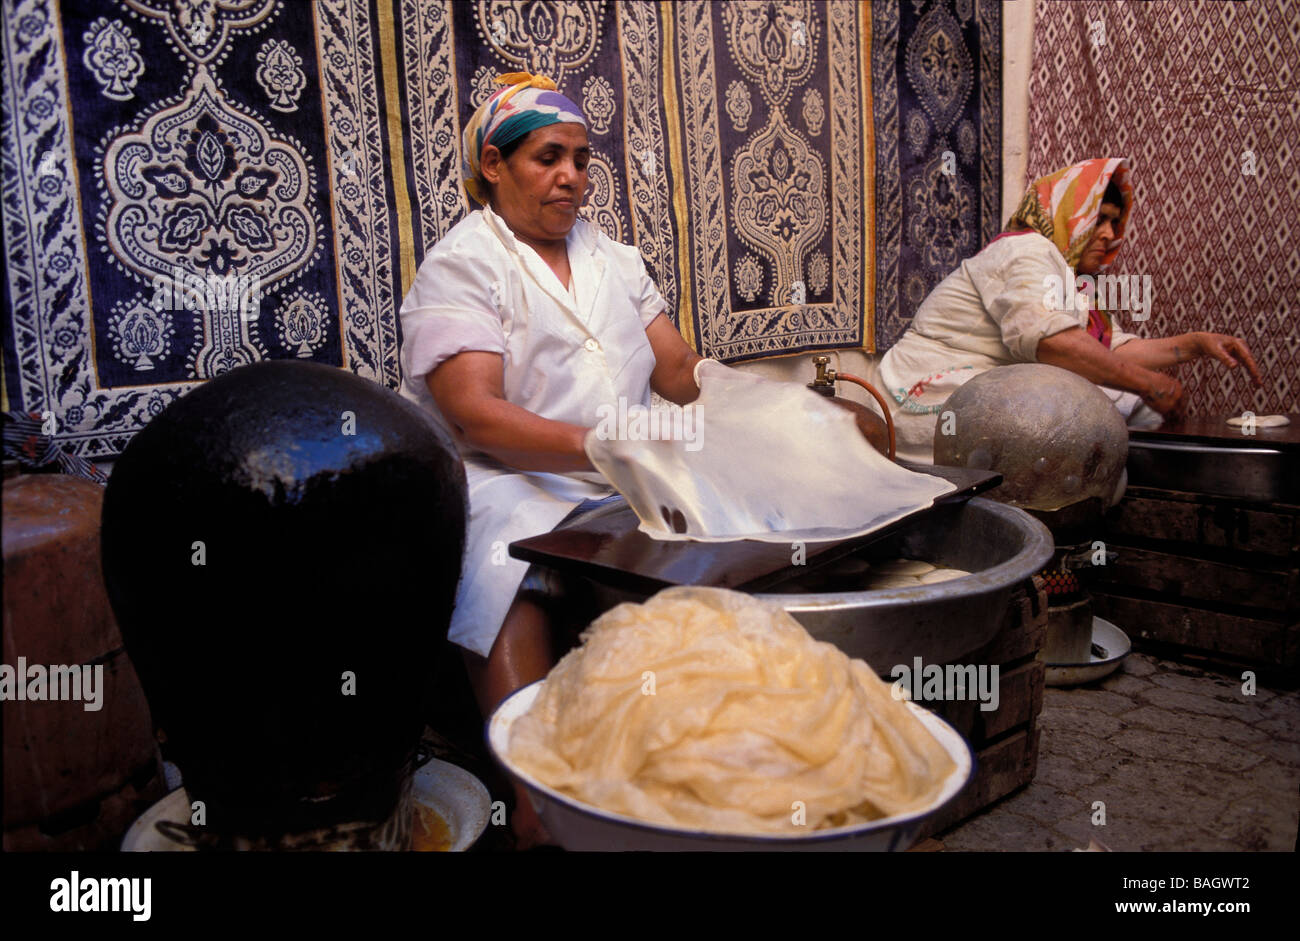 Pastilla morocco -Fotos und -Bildmaterial in hoher Auflösung – Alamy